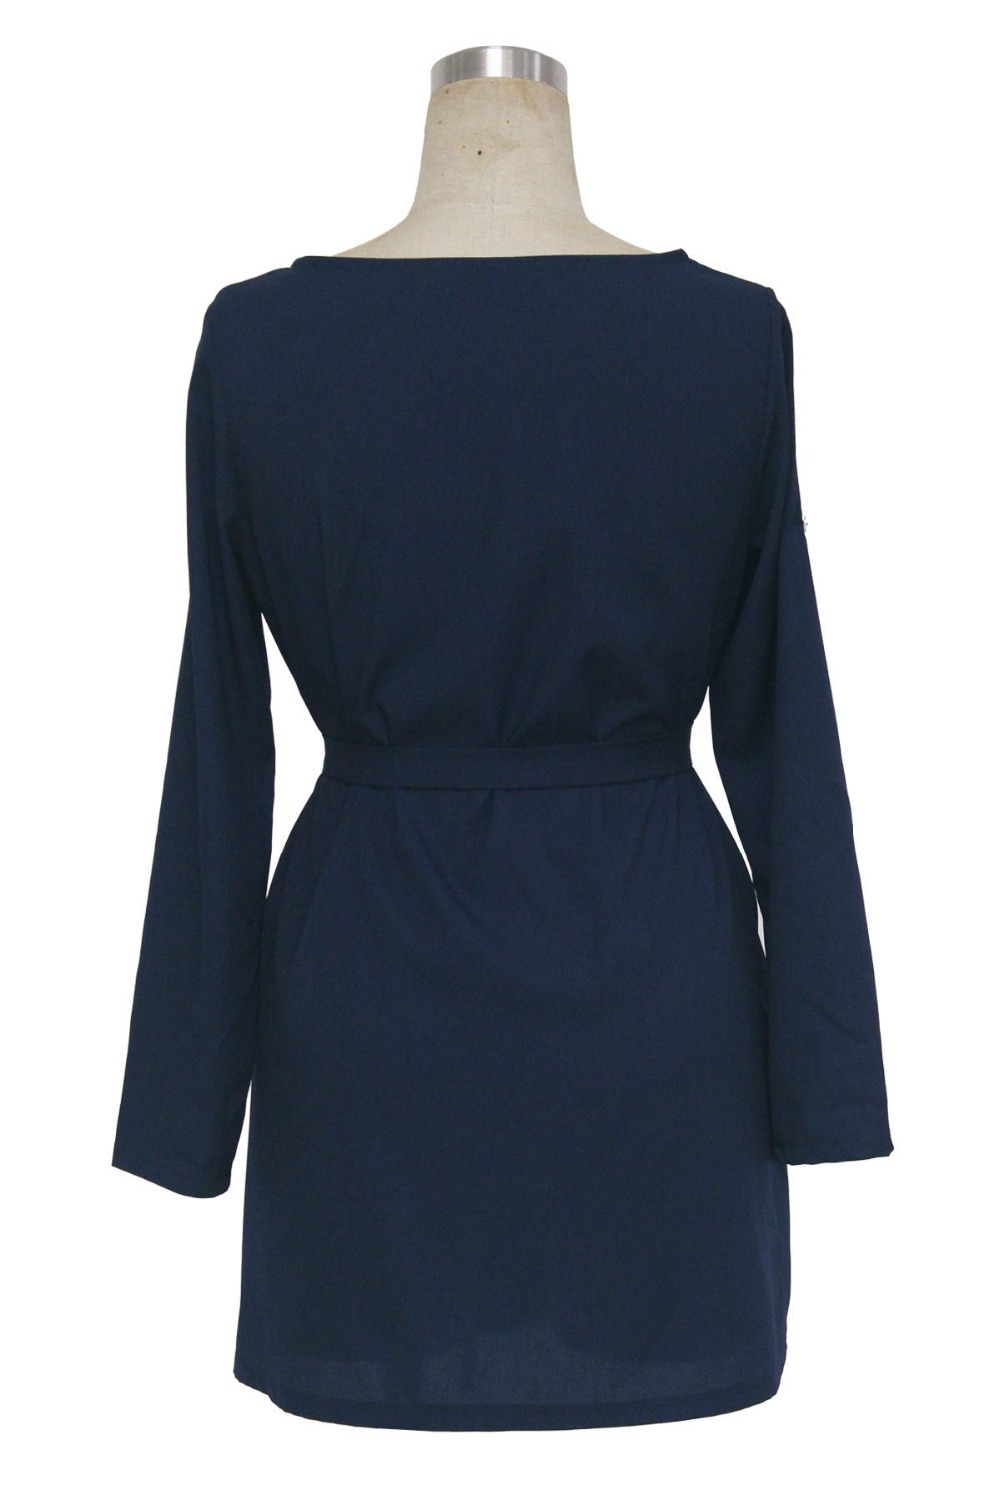 Fashion Women Elegant shirts Dresses With Belt Office Formal O-neck long Sleeve Casual Navy Blue Plus Size